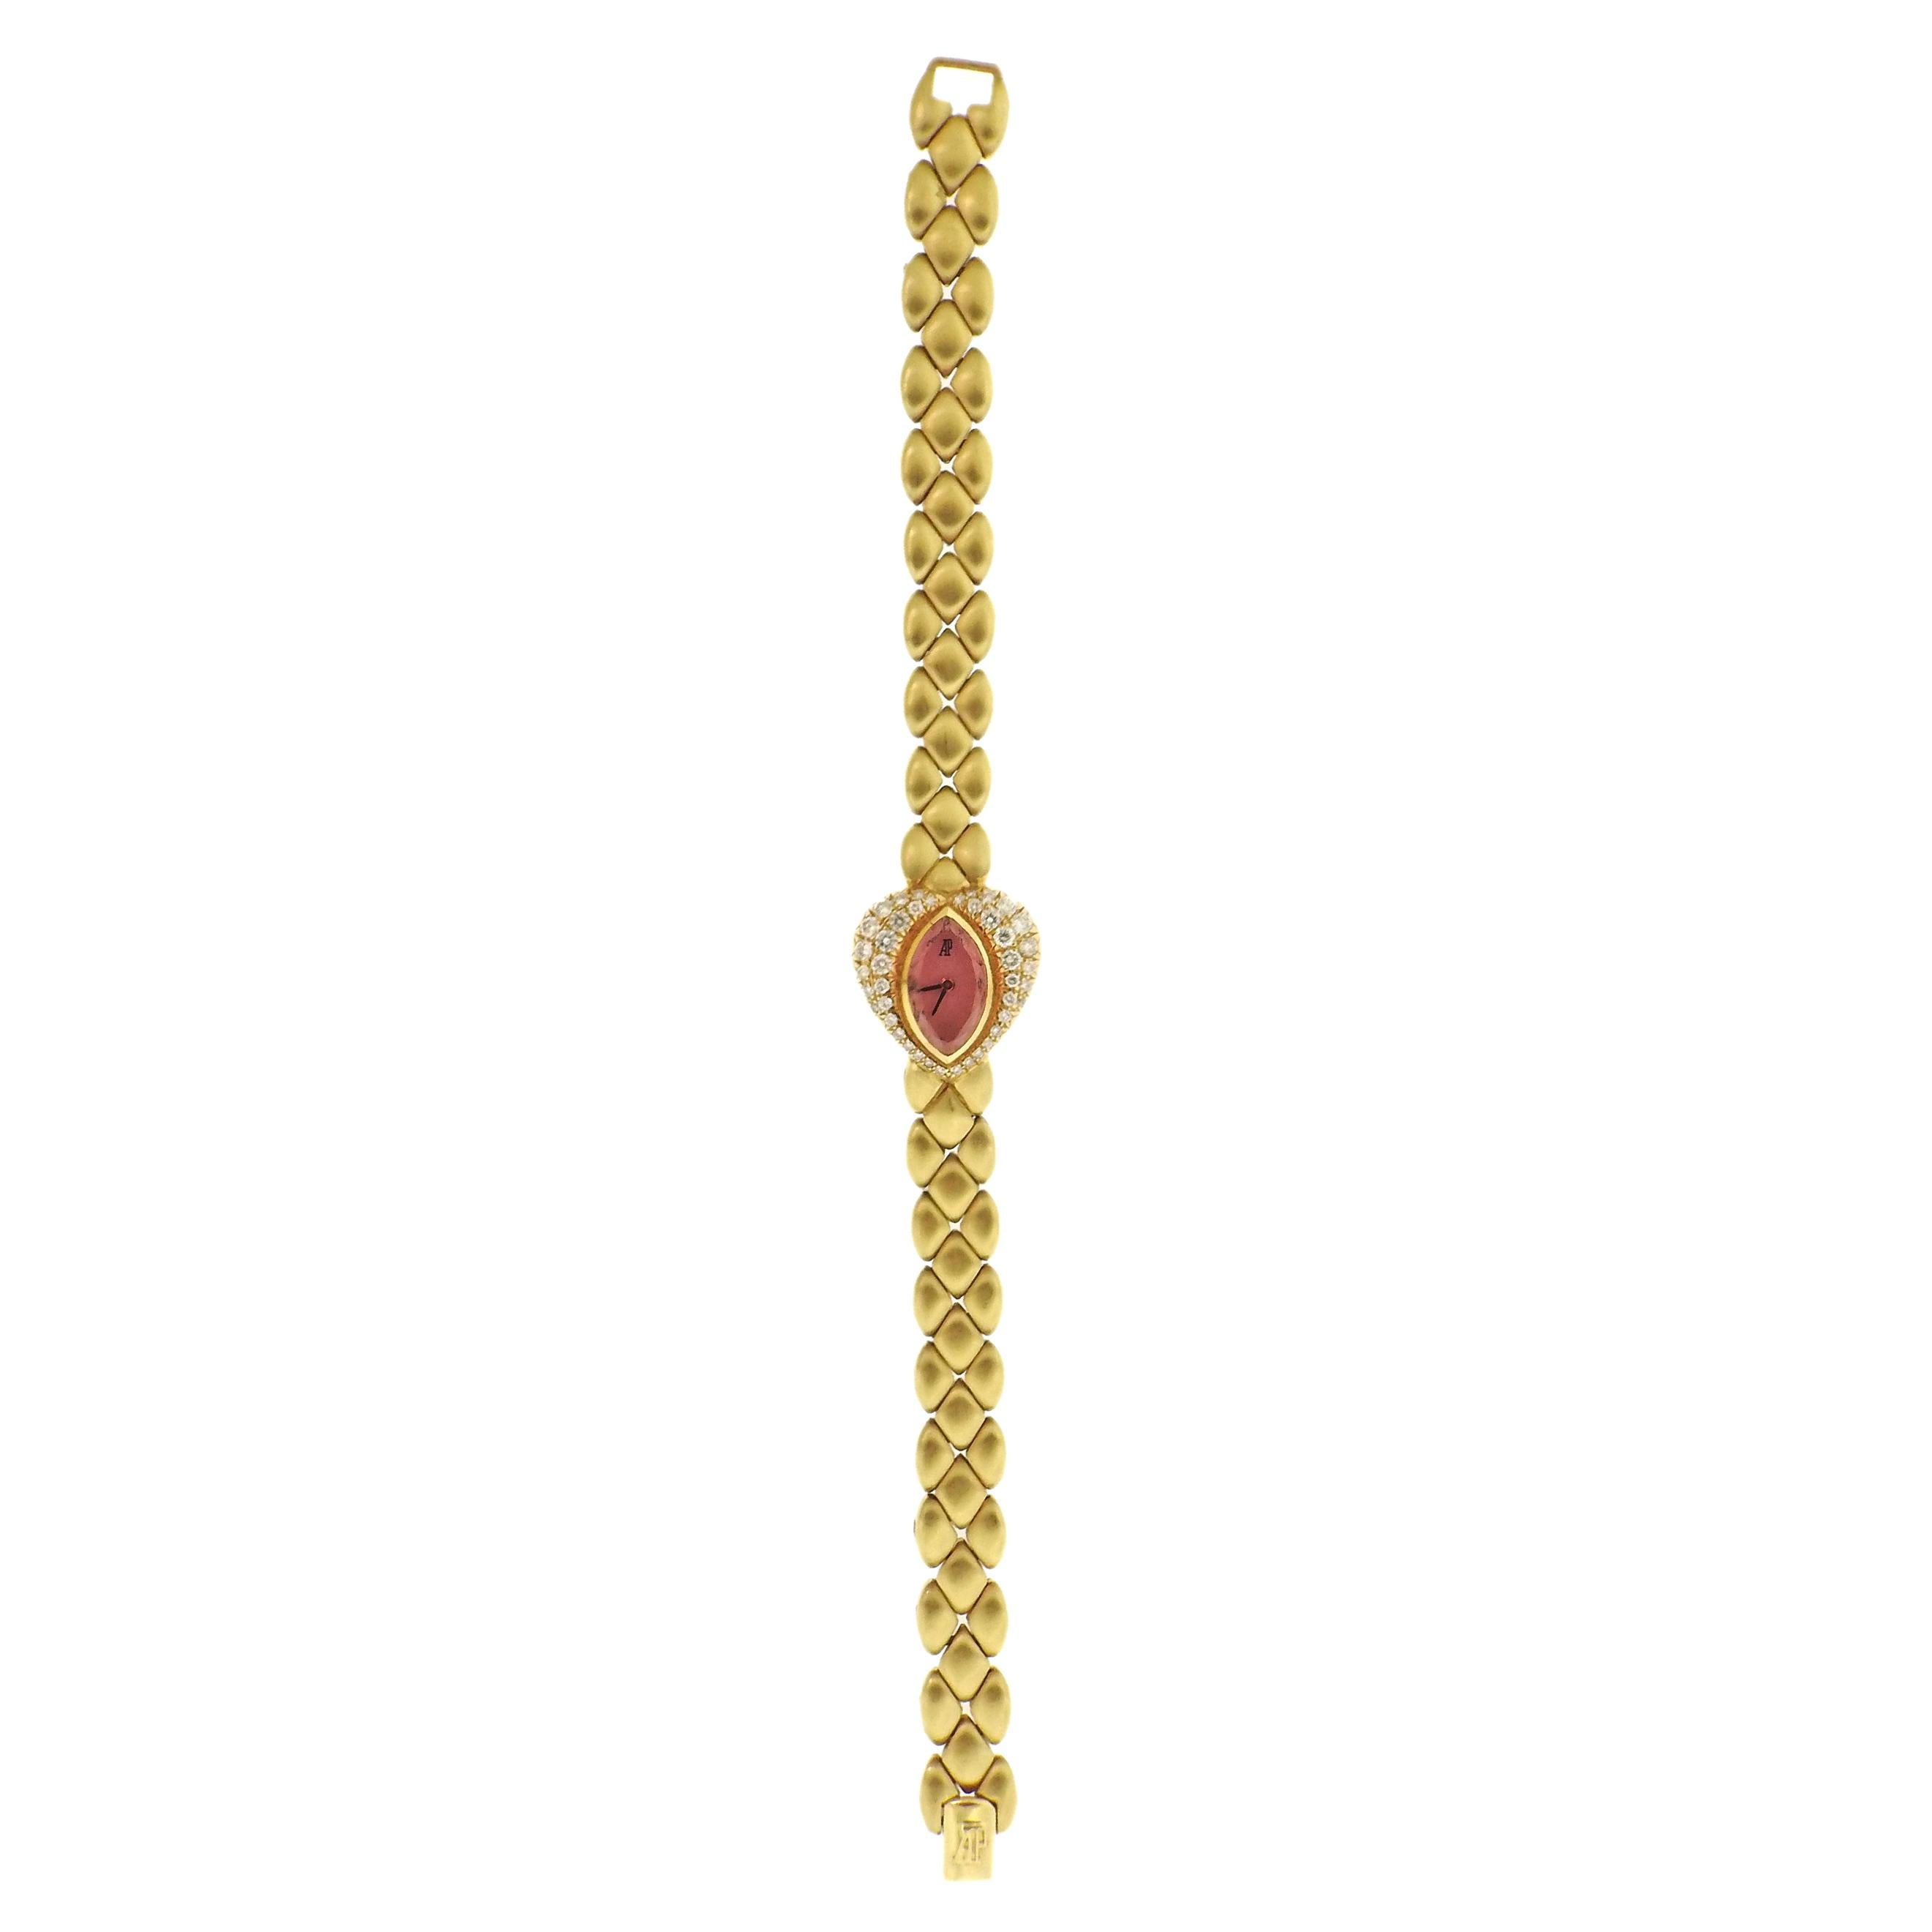 Audemars Piguet Diamond Yellow Gold Ladies Heart Bracelet Watch